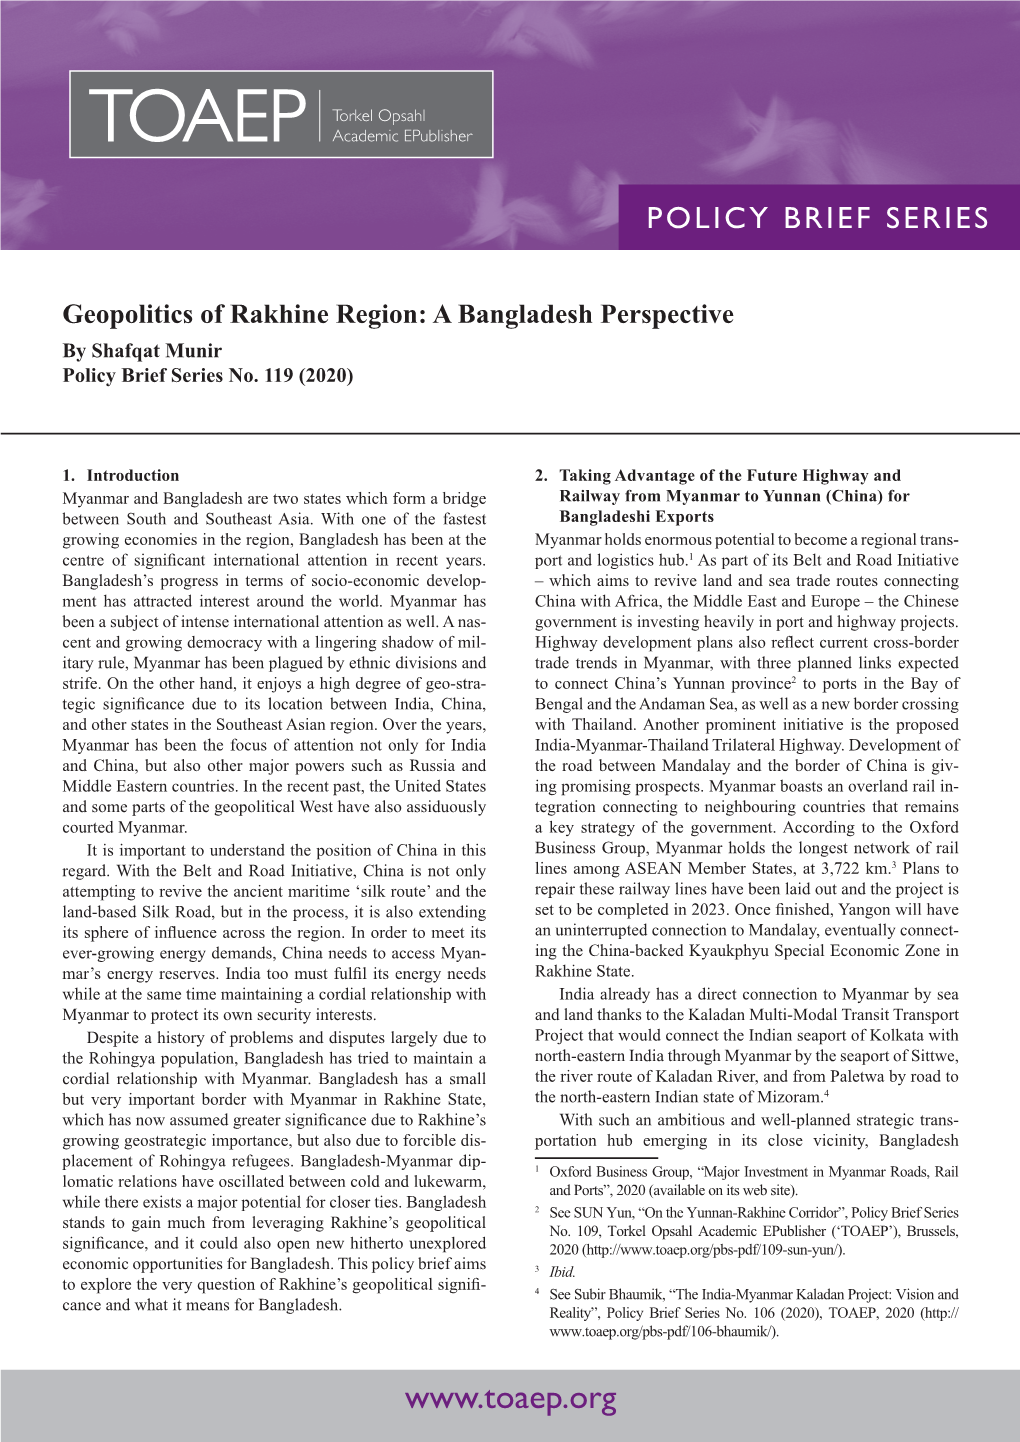 Geopolitics of Rakhine Region: a Bangladesh Perspective by Shafqat Munir Policy Brief Series No